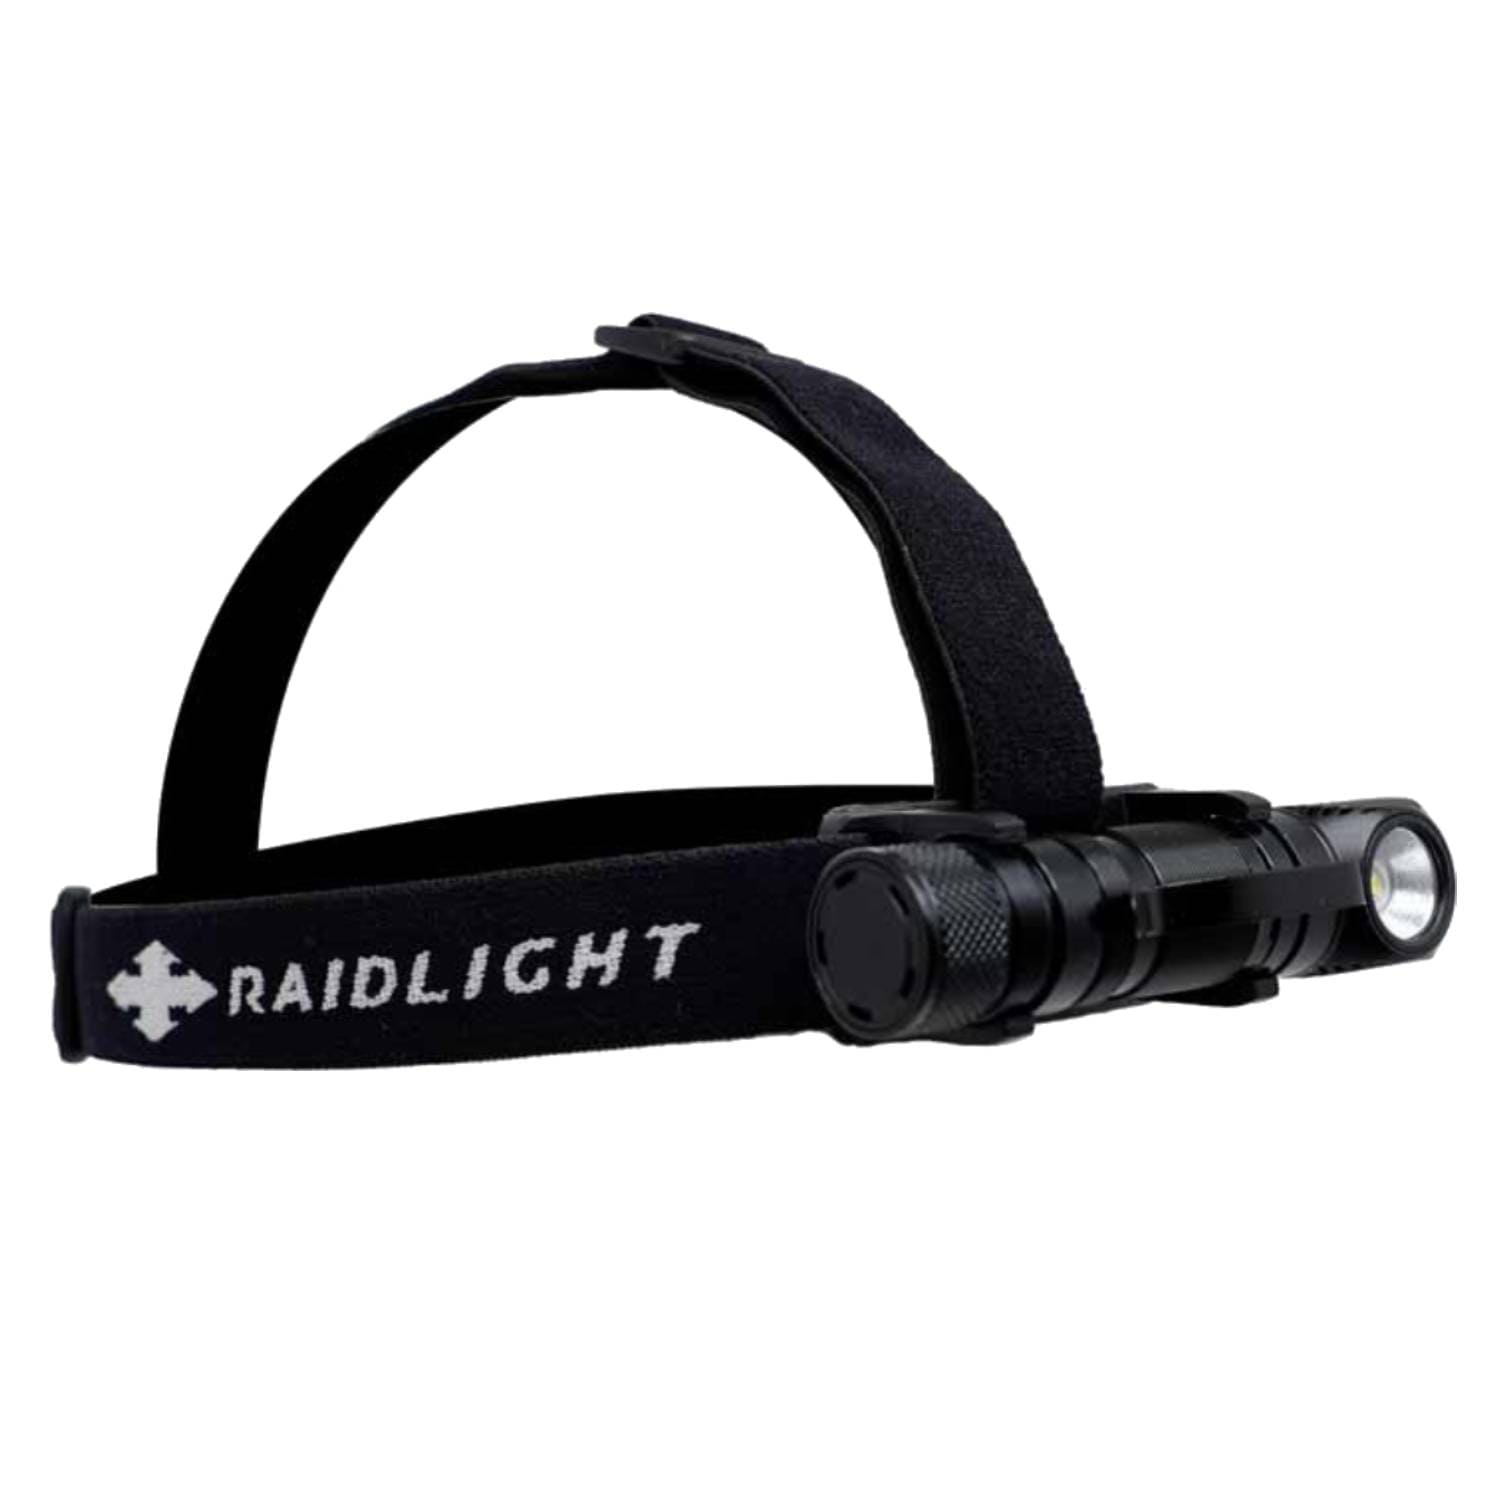 Raidlight Ultralight 1200 Headlamp